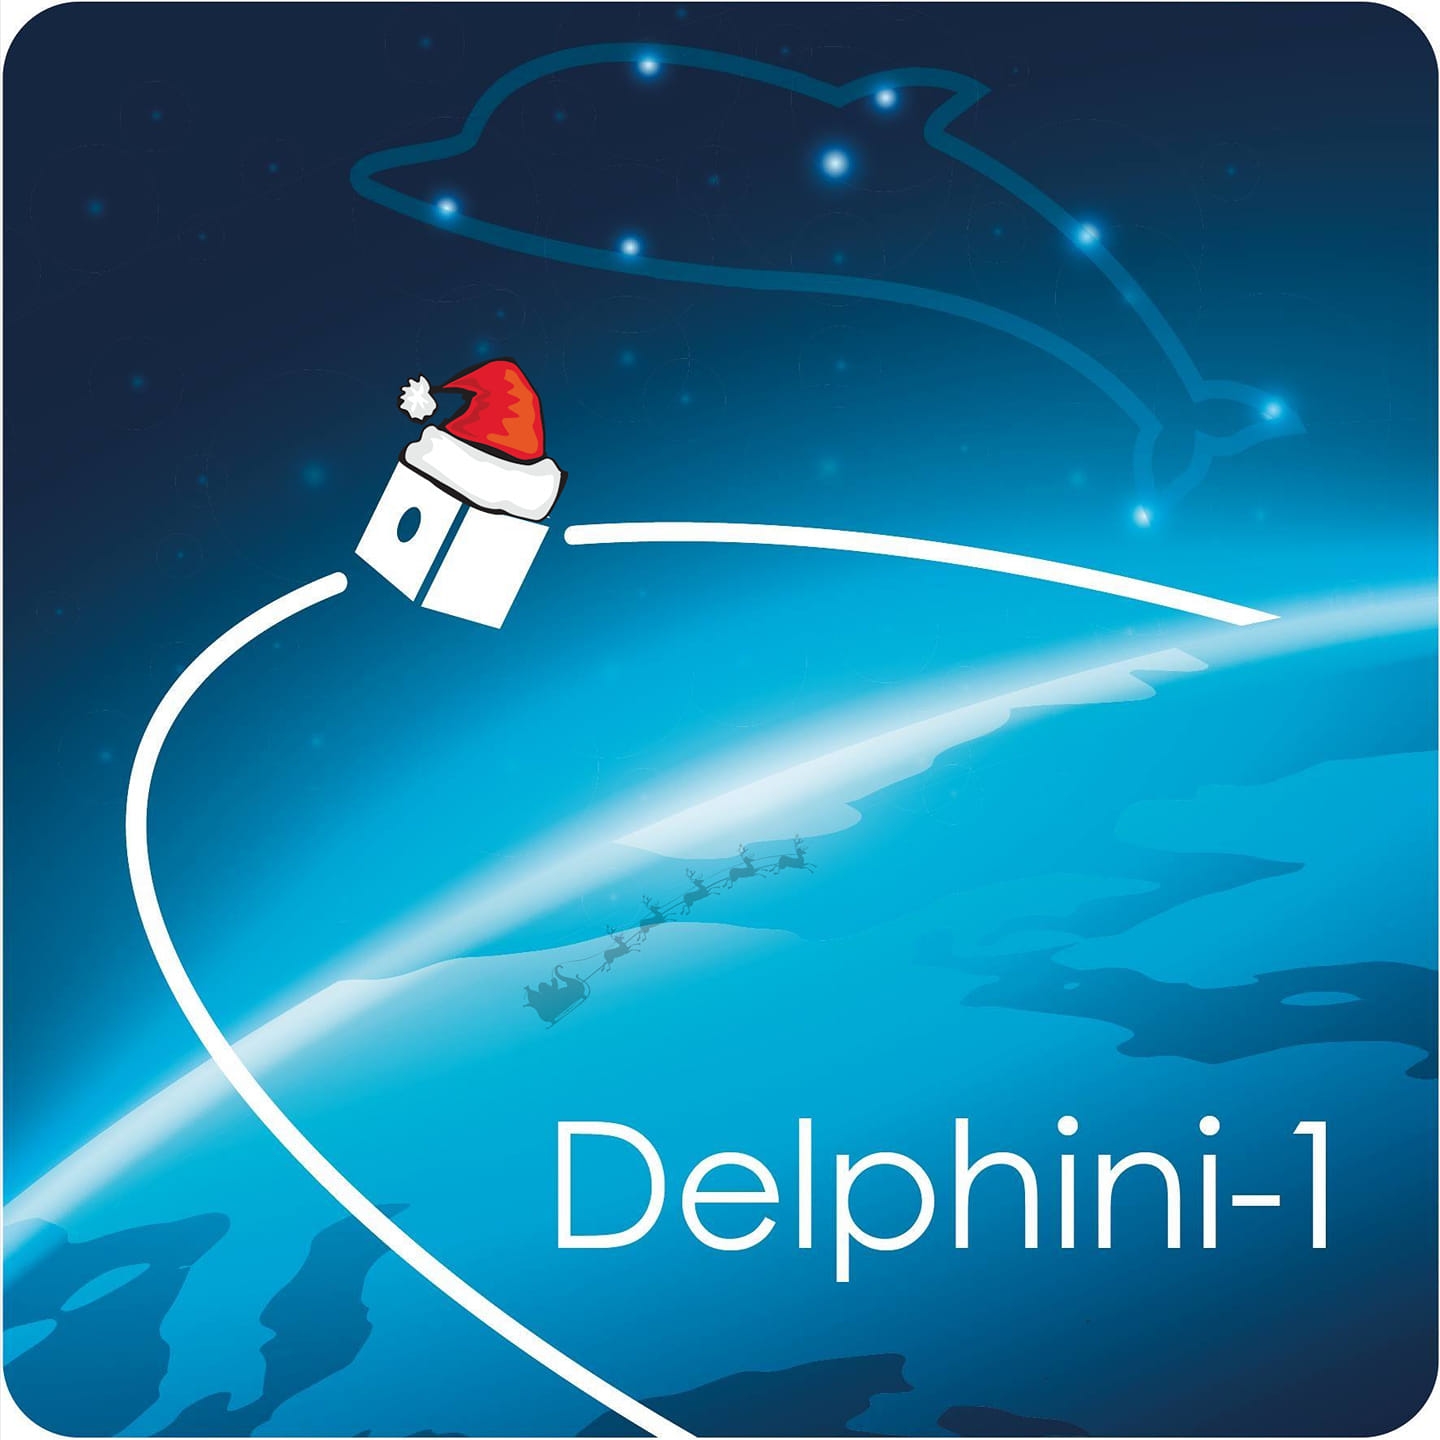 Delphini-1 logo with nissehue. Illustration: Samuel Grund.